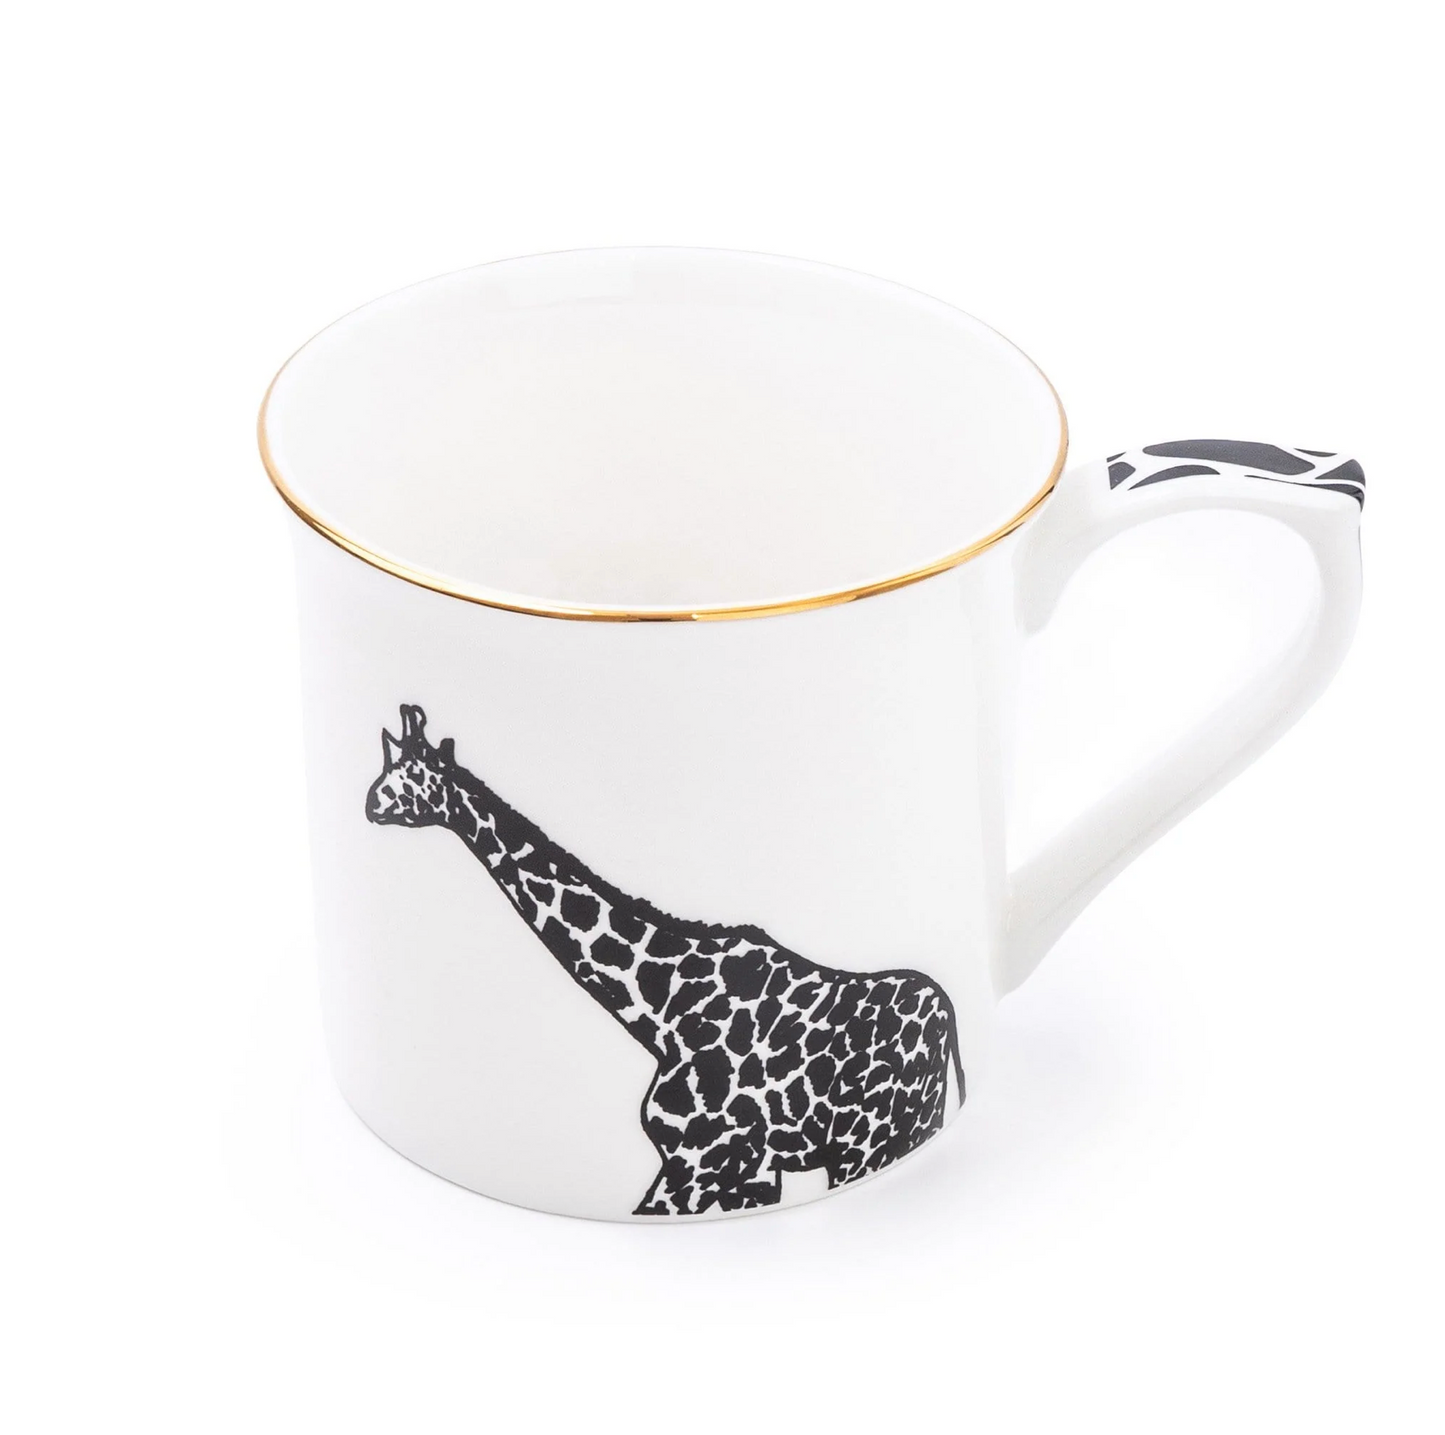 Fine Bone China  Monochrome Mug, Giraffe